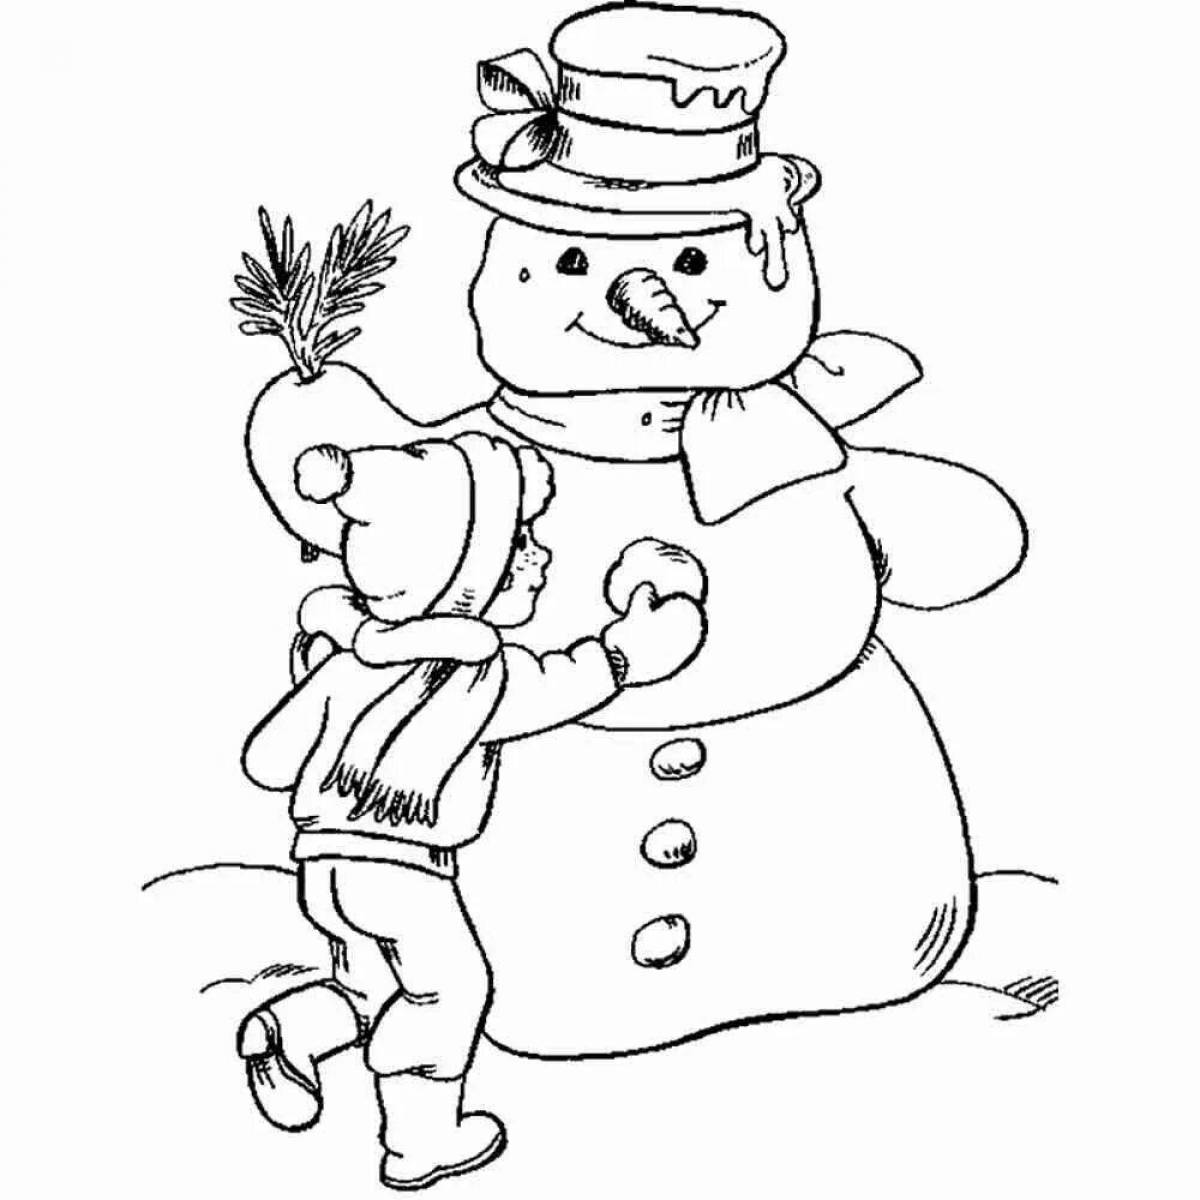 Coloring book of joyful snowman girl